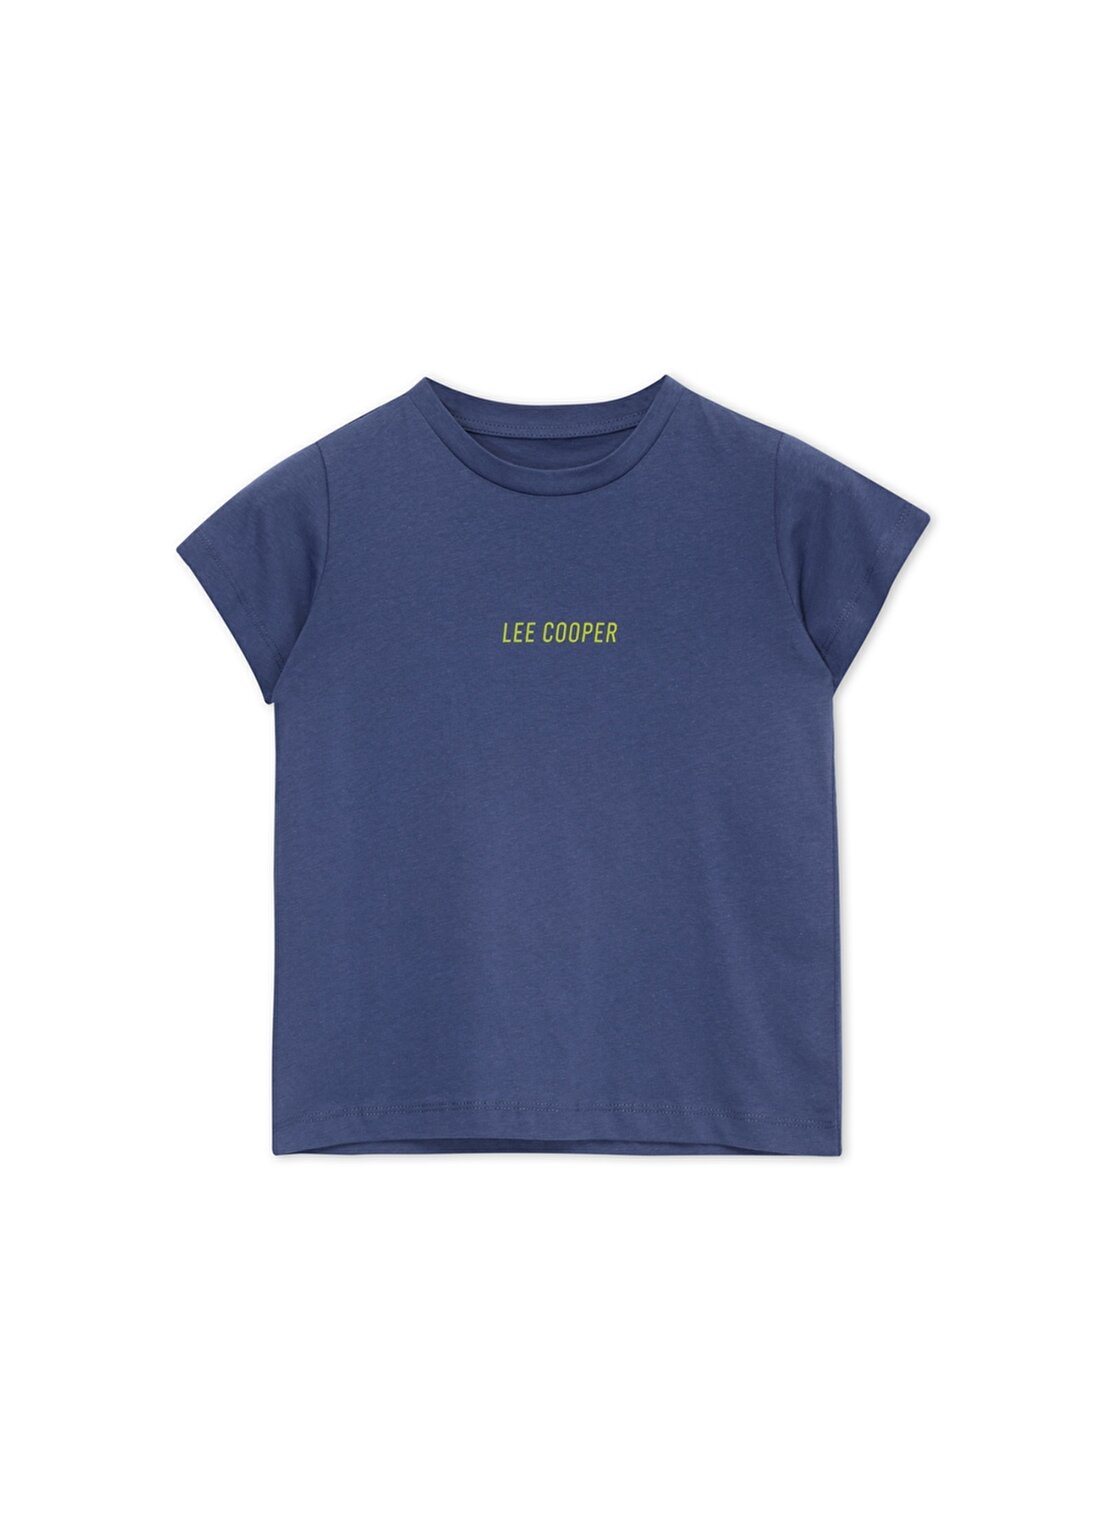 Lee Cooper Baskılı Lacivert Erkek Çocuk T-Shirt 242 LCB 242007 MINISO LACİVERT